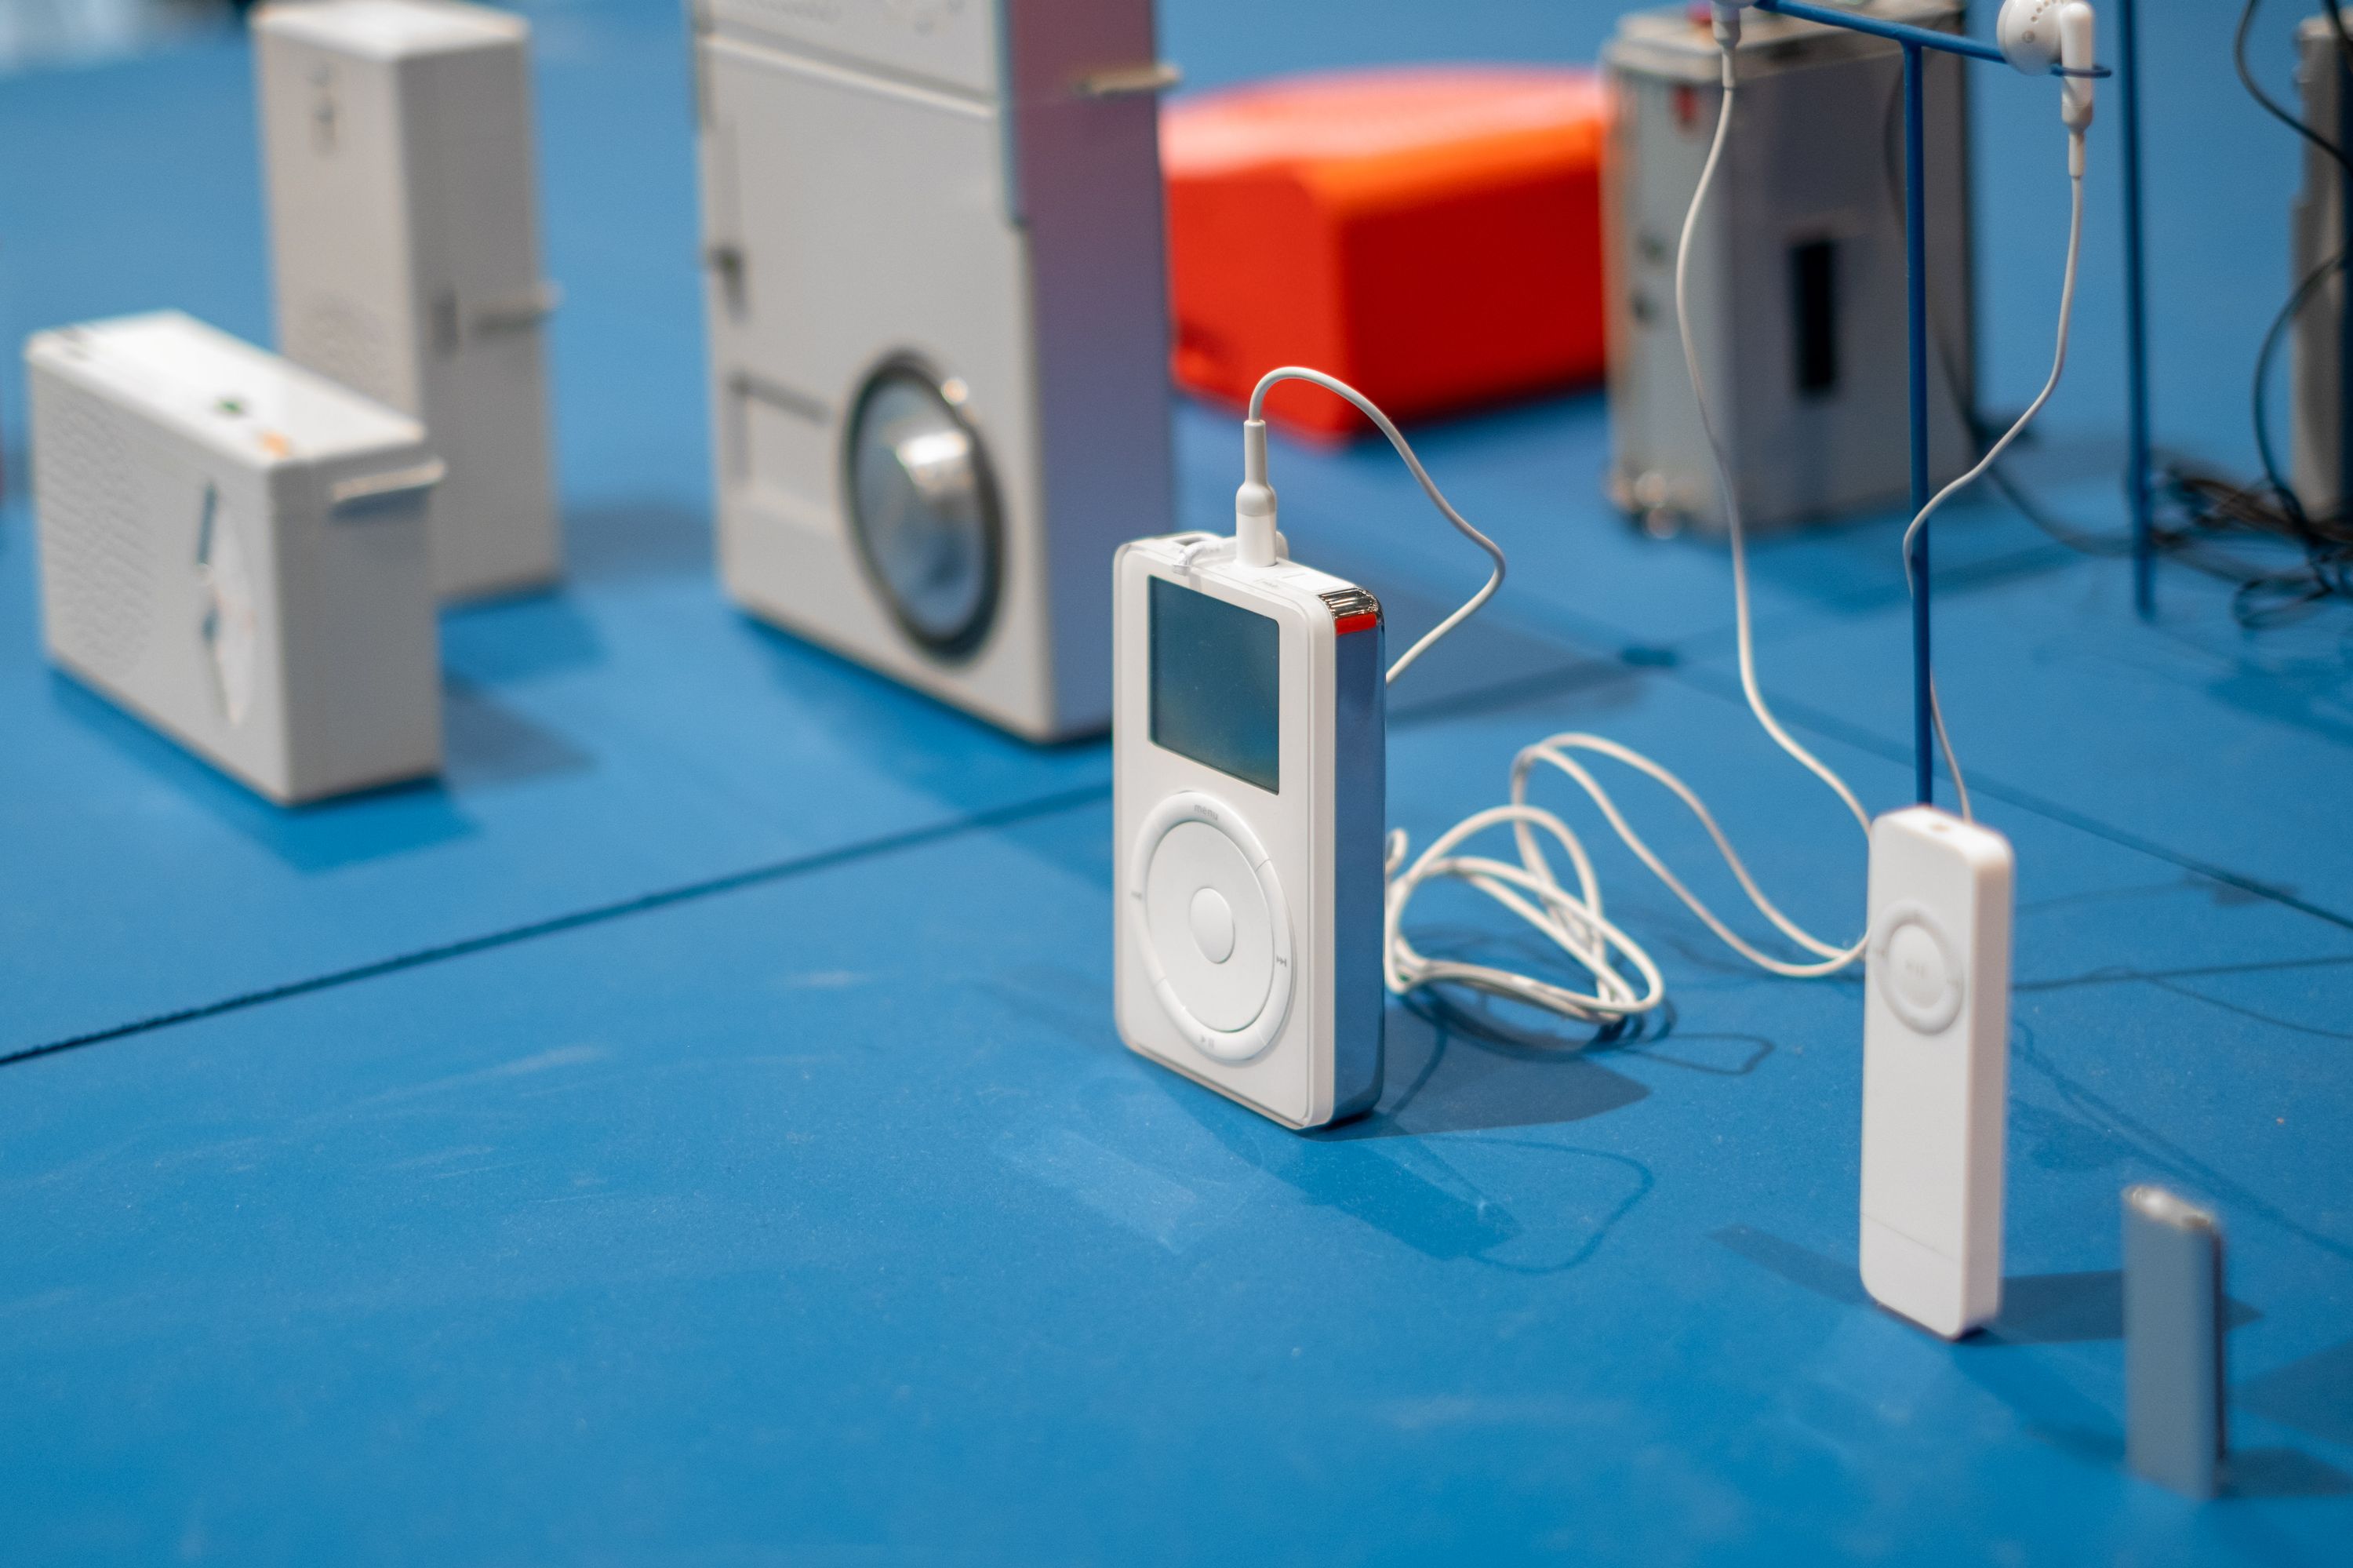 Art of Noise museum exhibit iPod